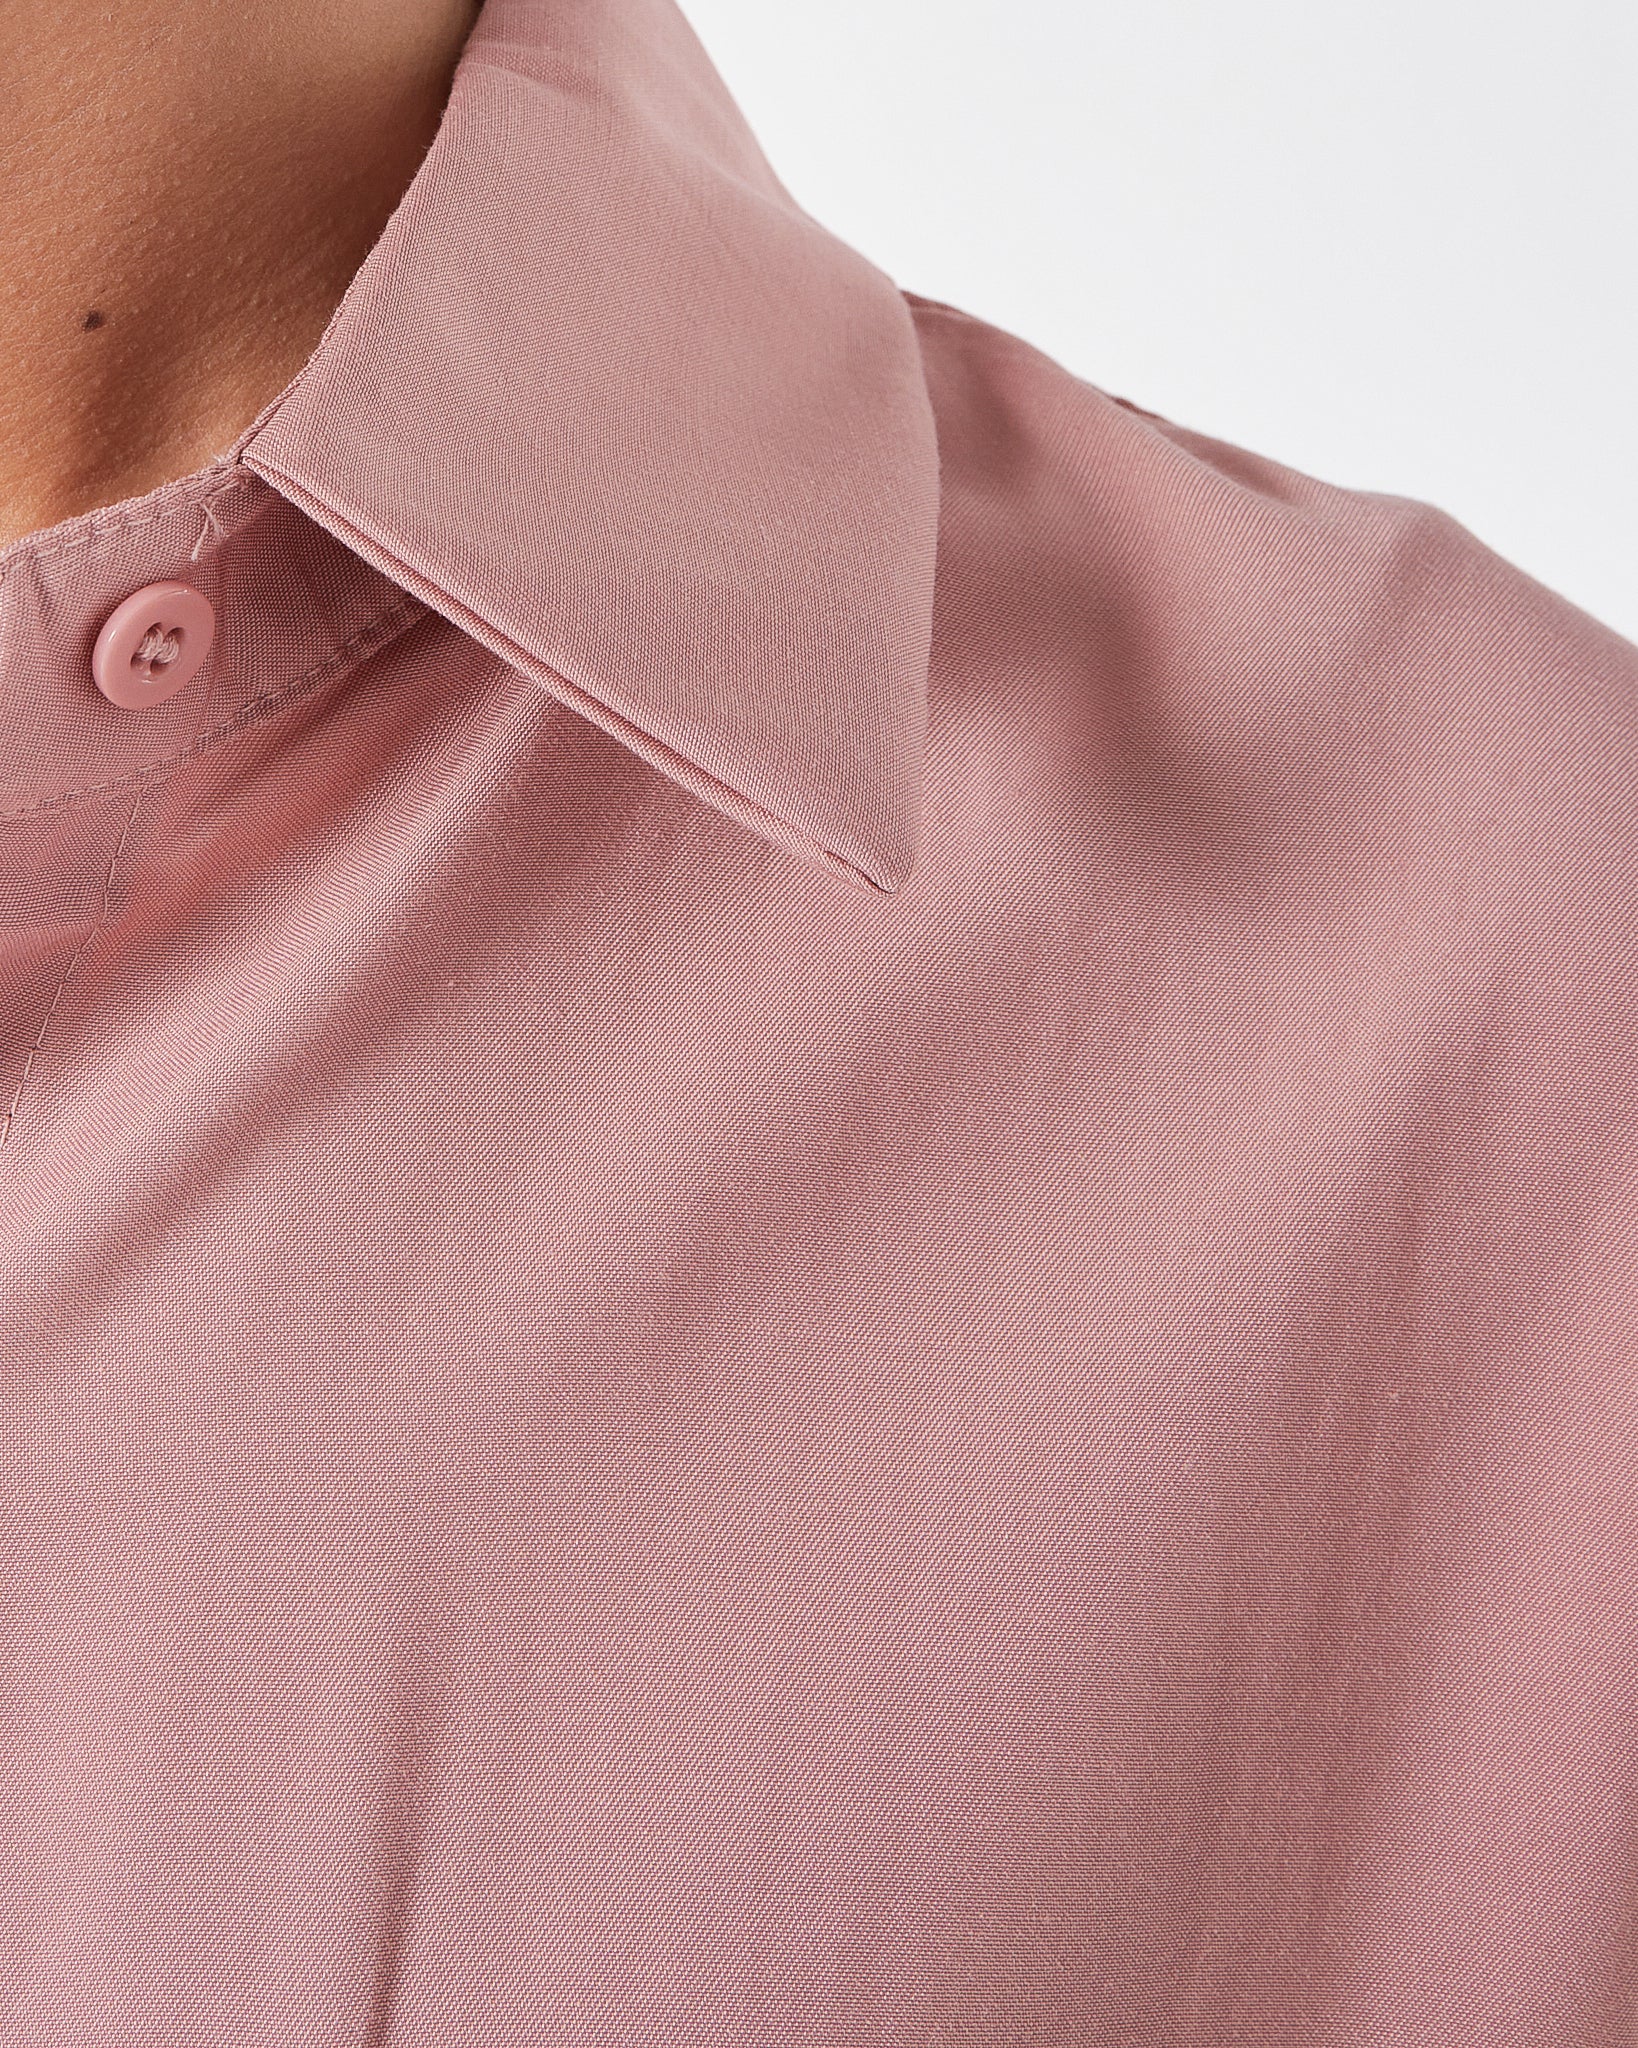 Lady Pink Satin Shirts Short Sleeve 17.90